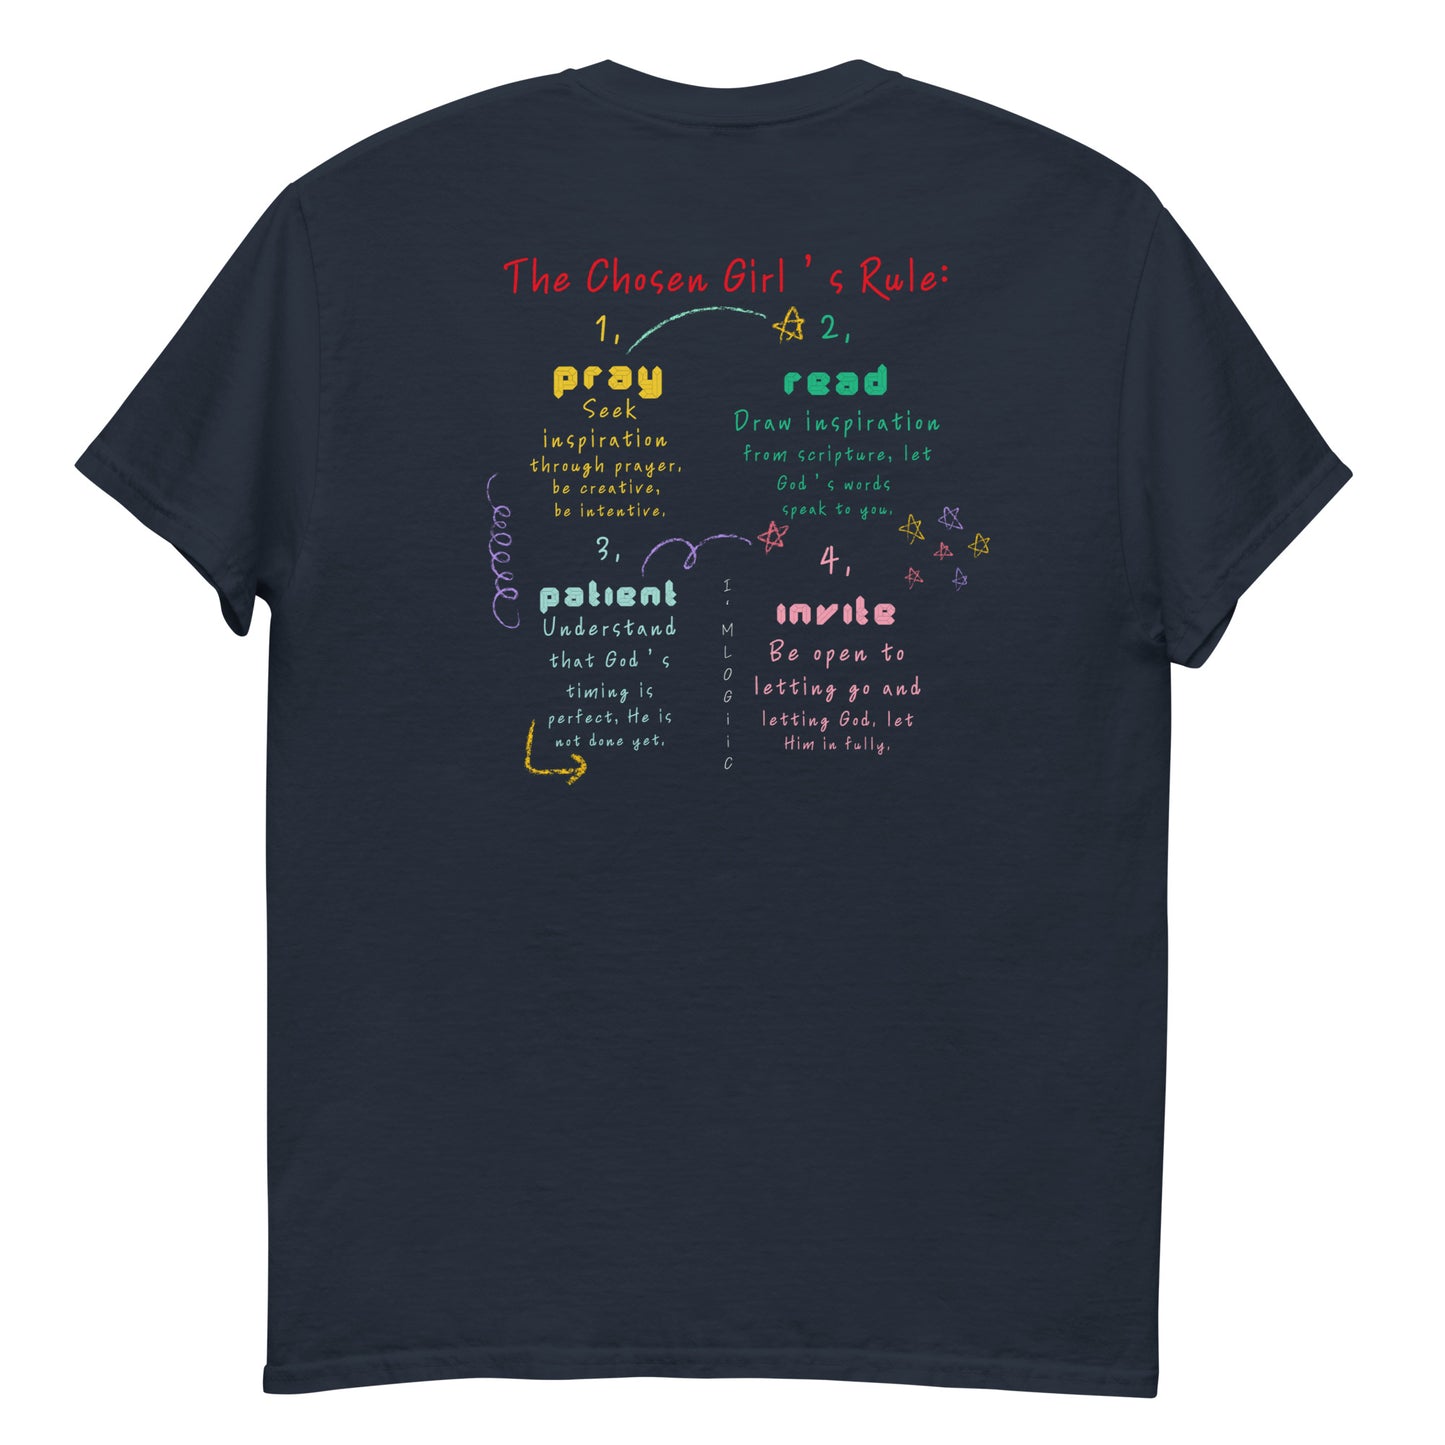 The Chosen Girl's Rules T-Shirt